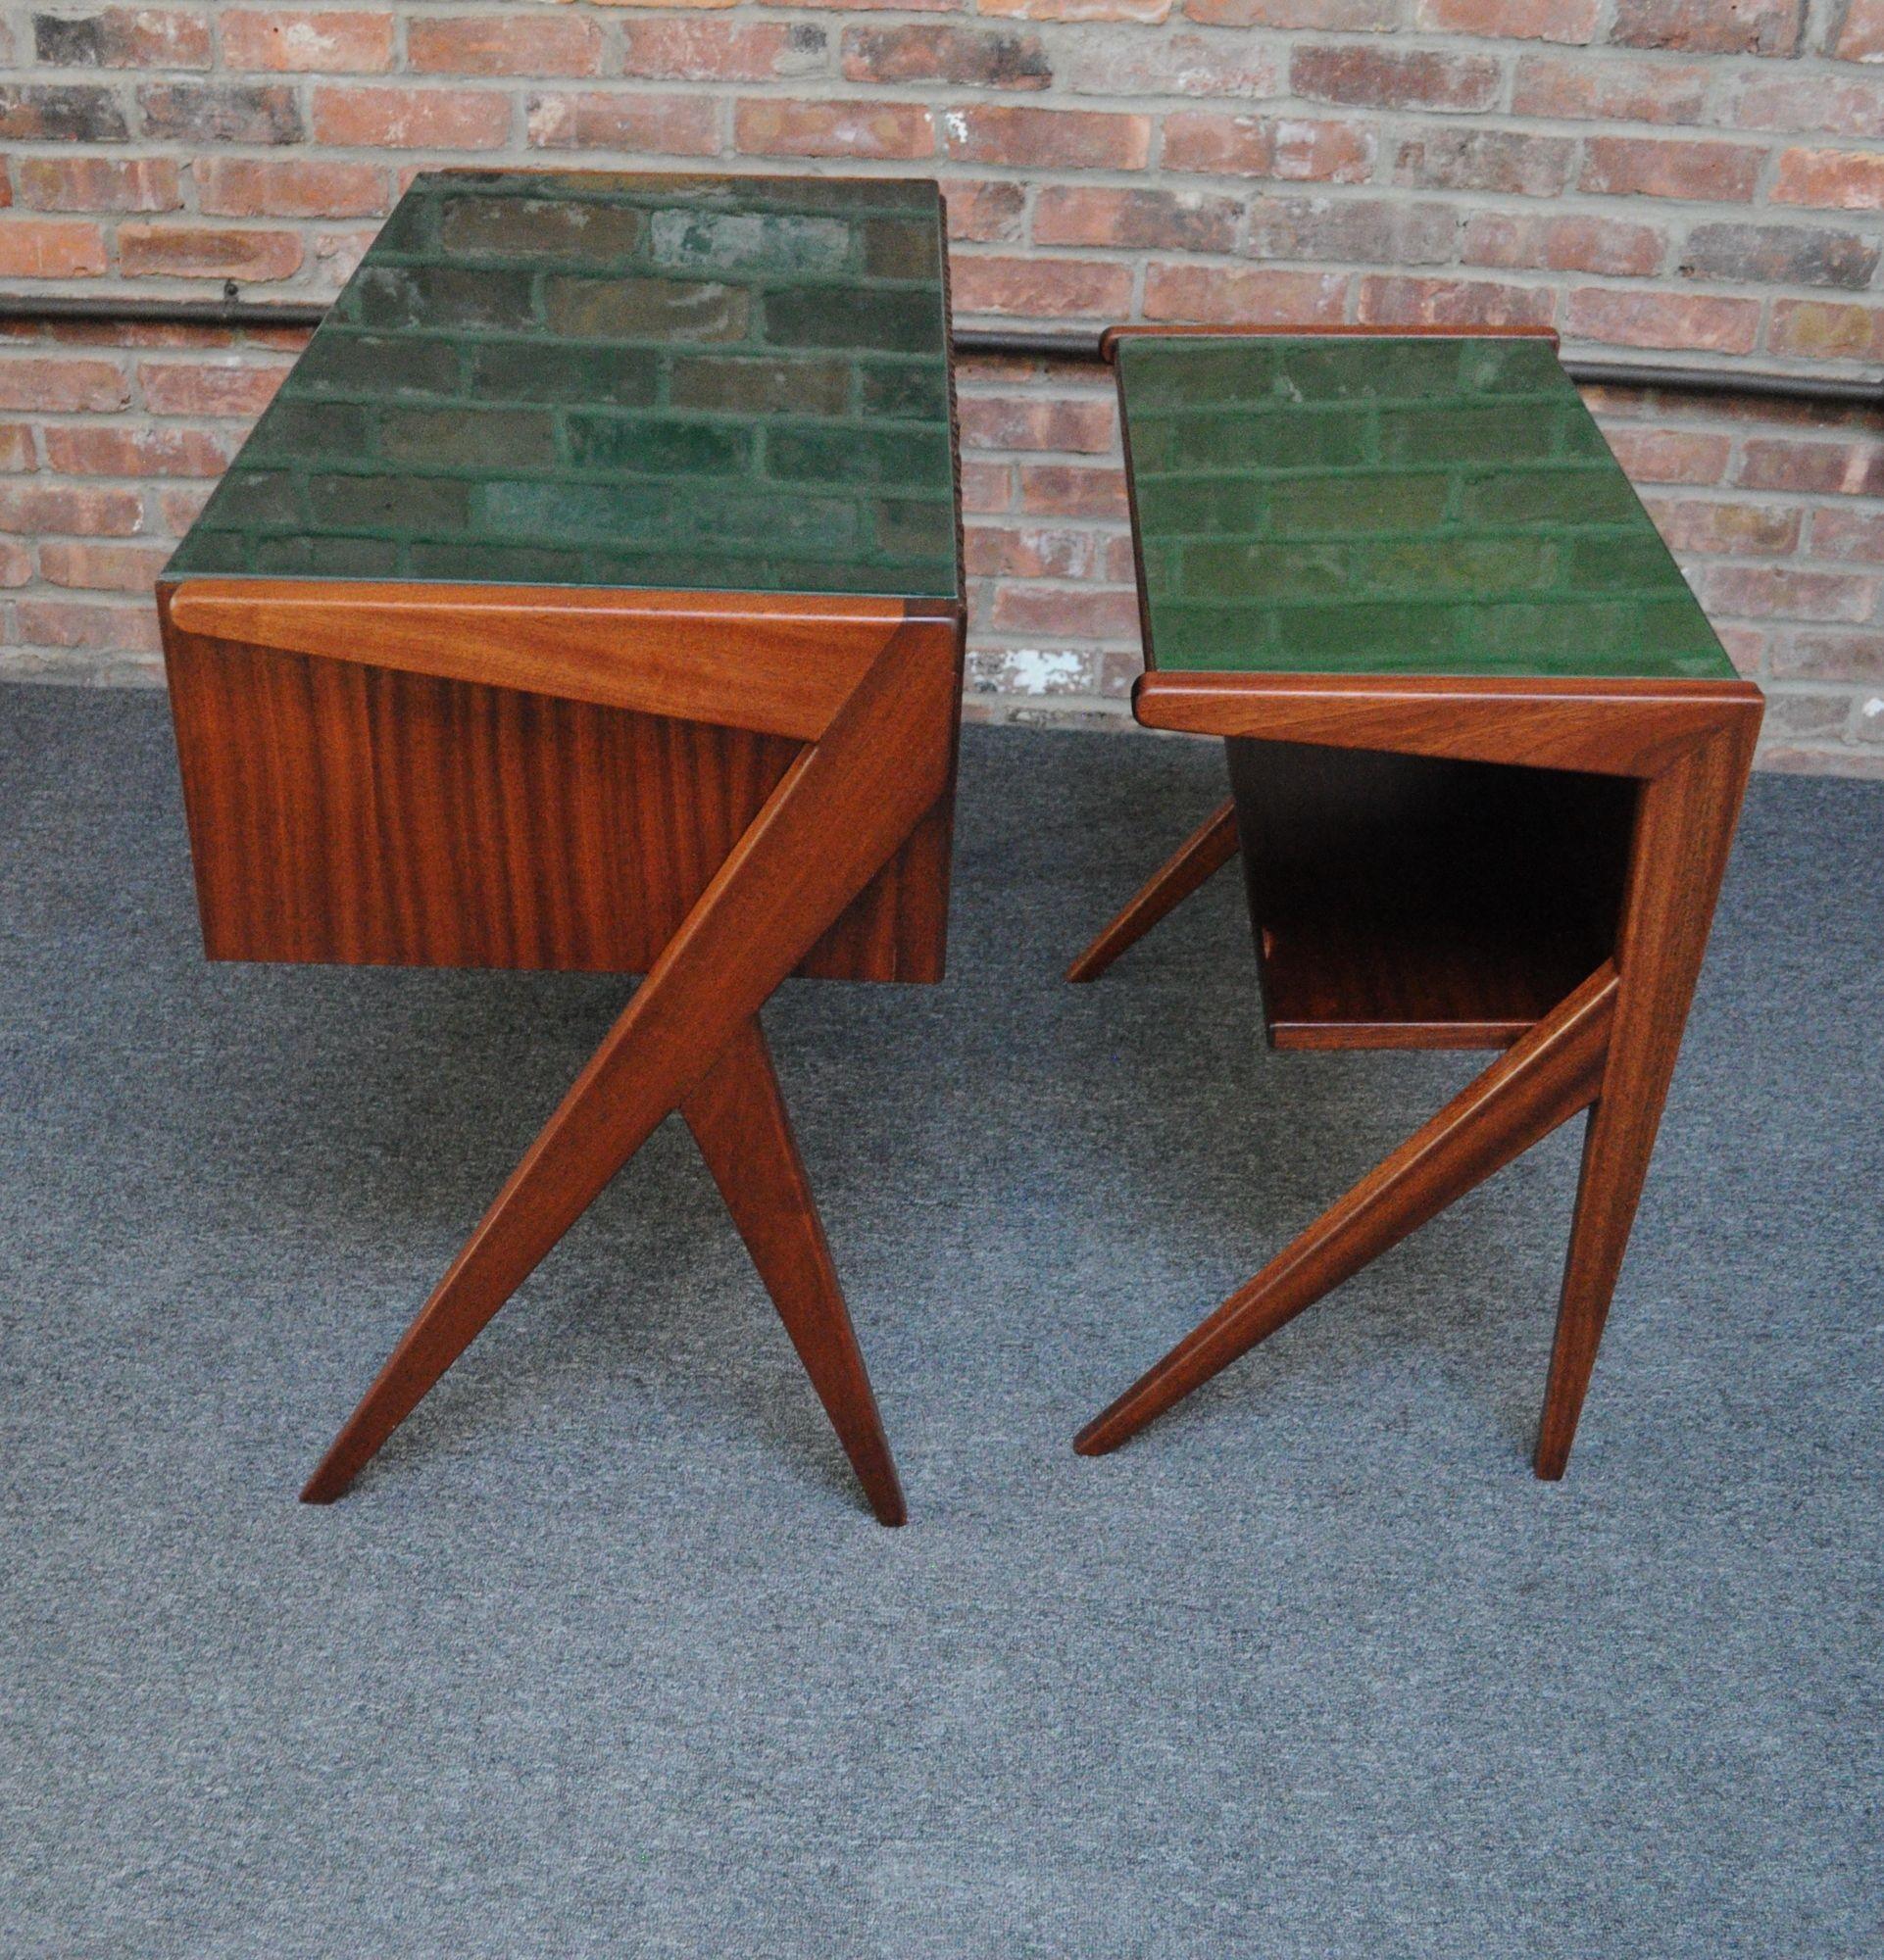 Silvio Cavatorta Diminutive Desk with Companion Table in Walnut and Green Glass For Sale 1